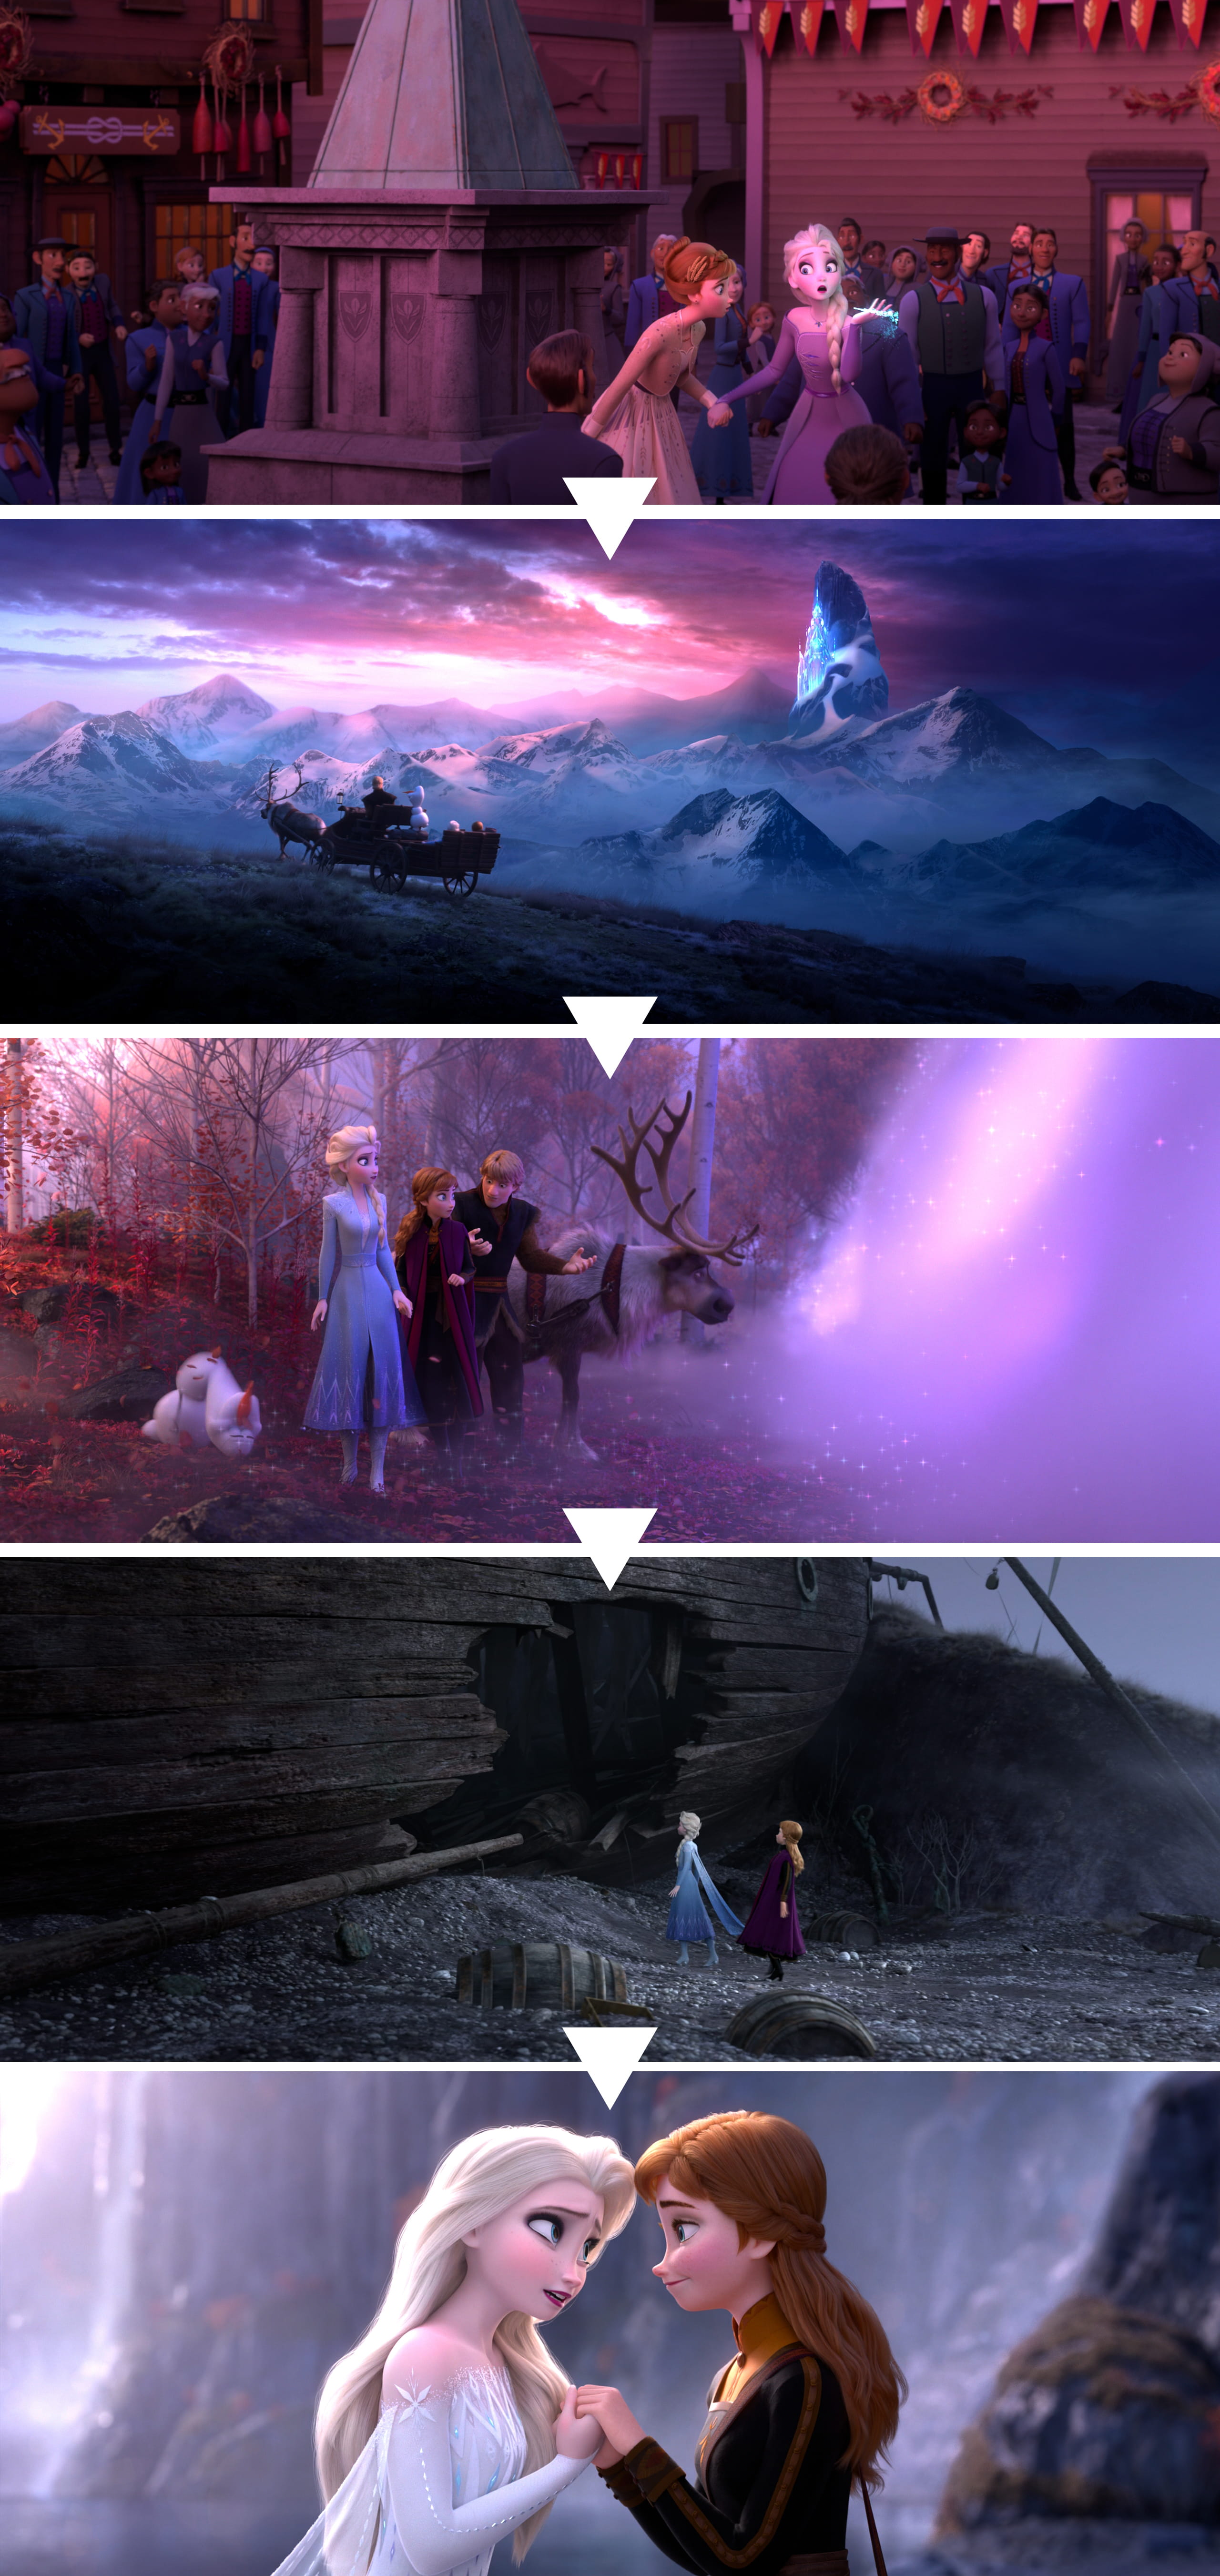 Event timeline in Frozen 2